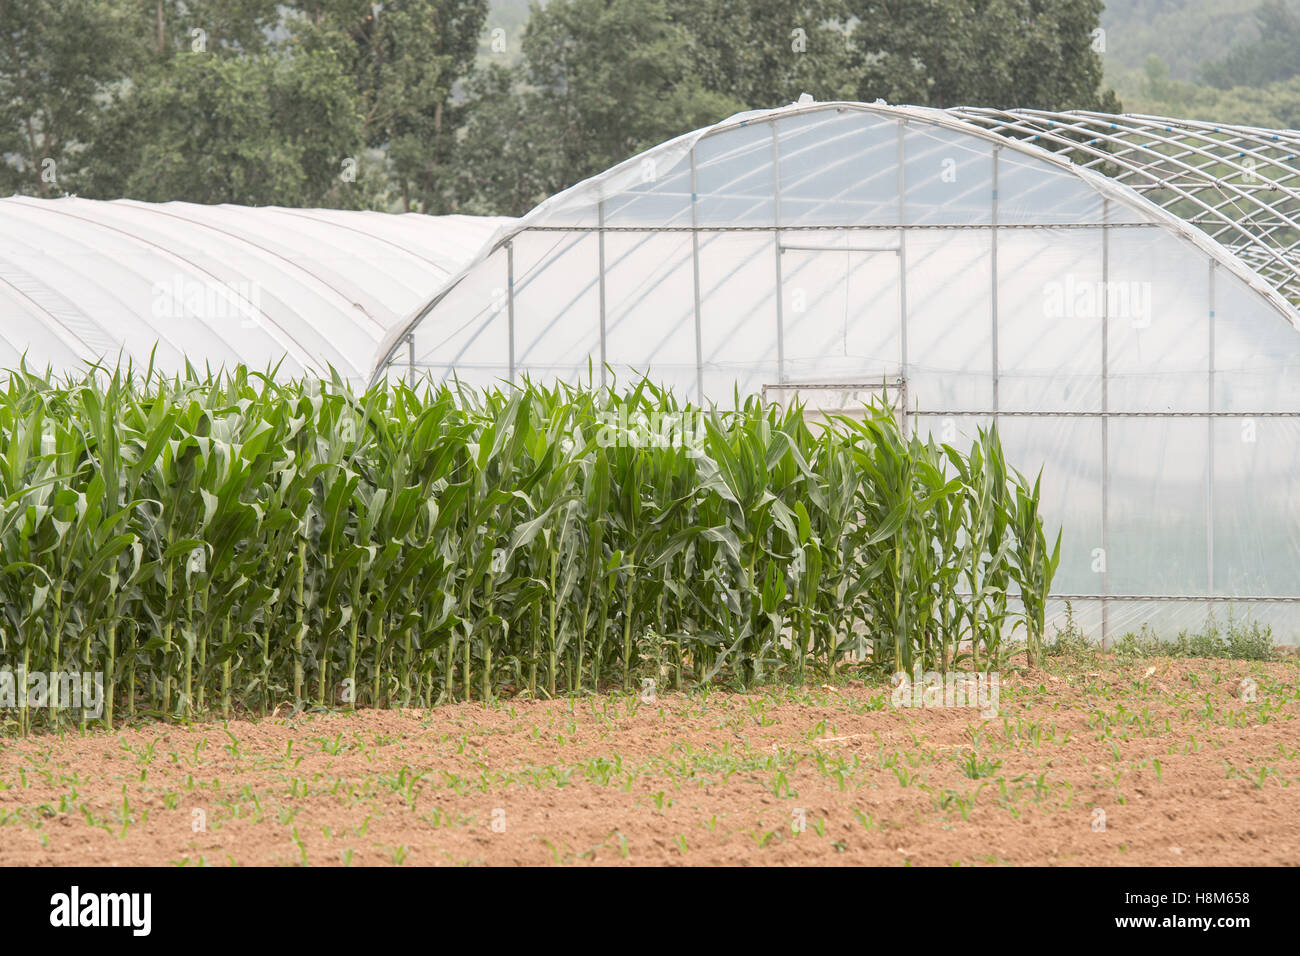 Beijing, China - Stalks of corn growing next to greenhouses on a farm near Beijing, China. Stock Photo